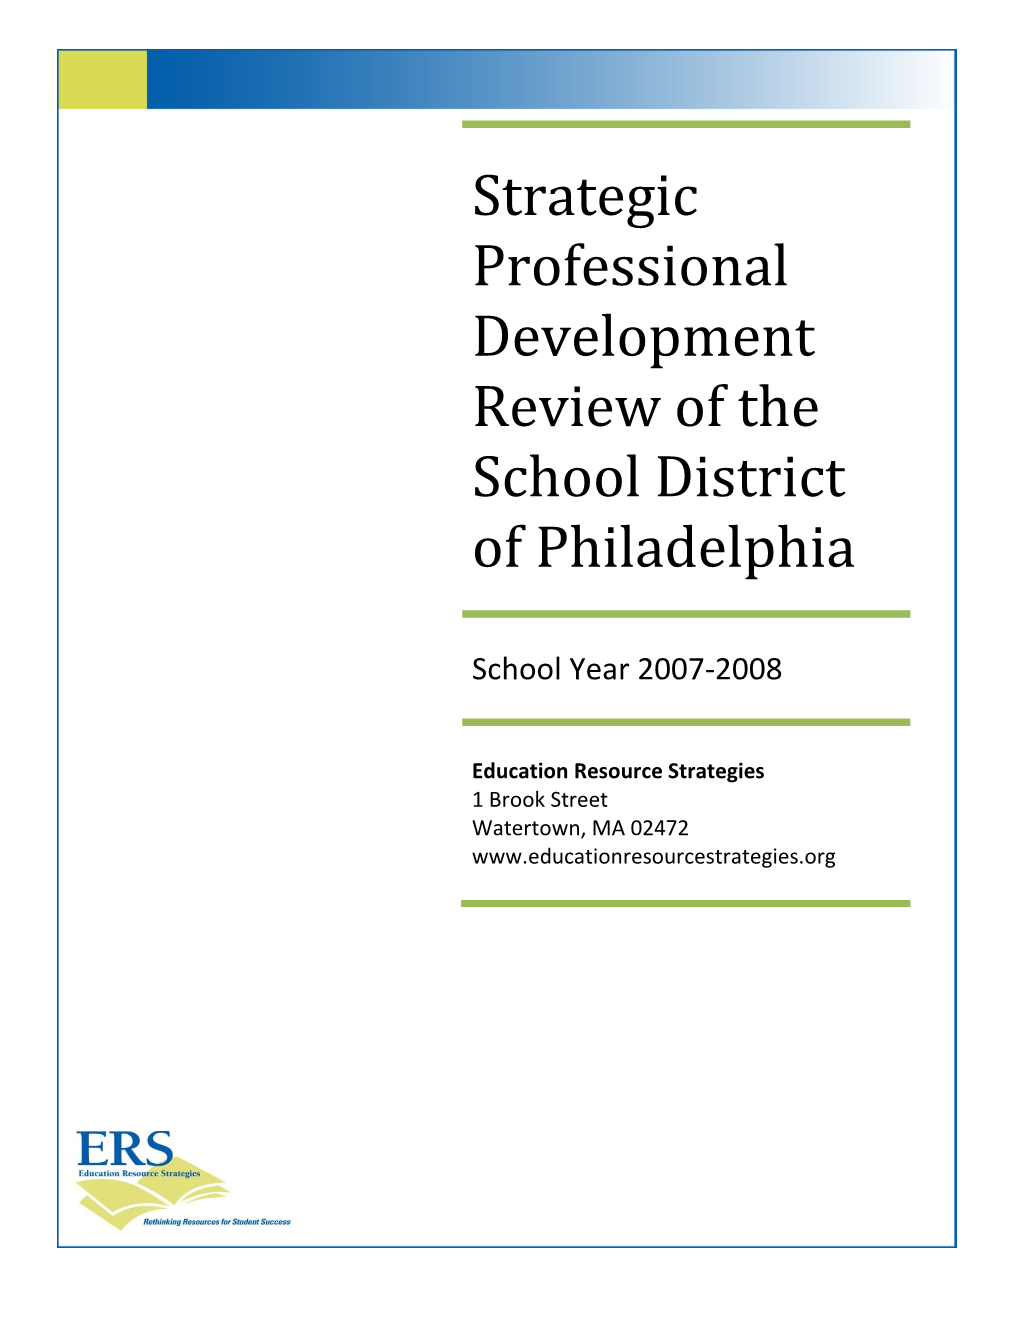 Strategic Professional Development Review of the School District of Philadelphia